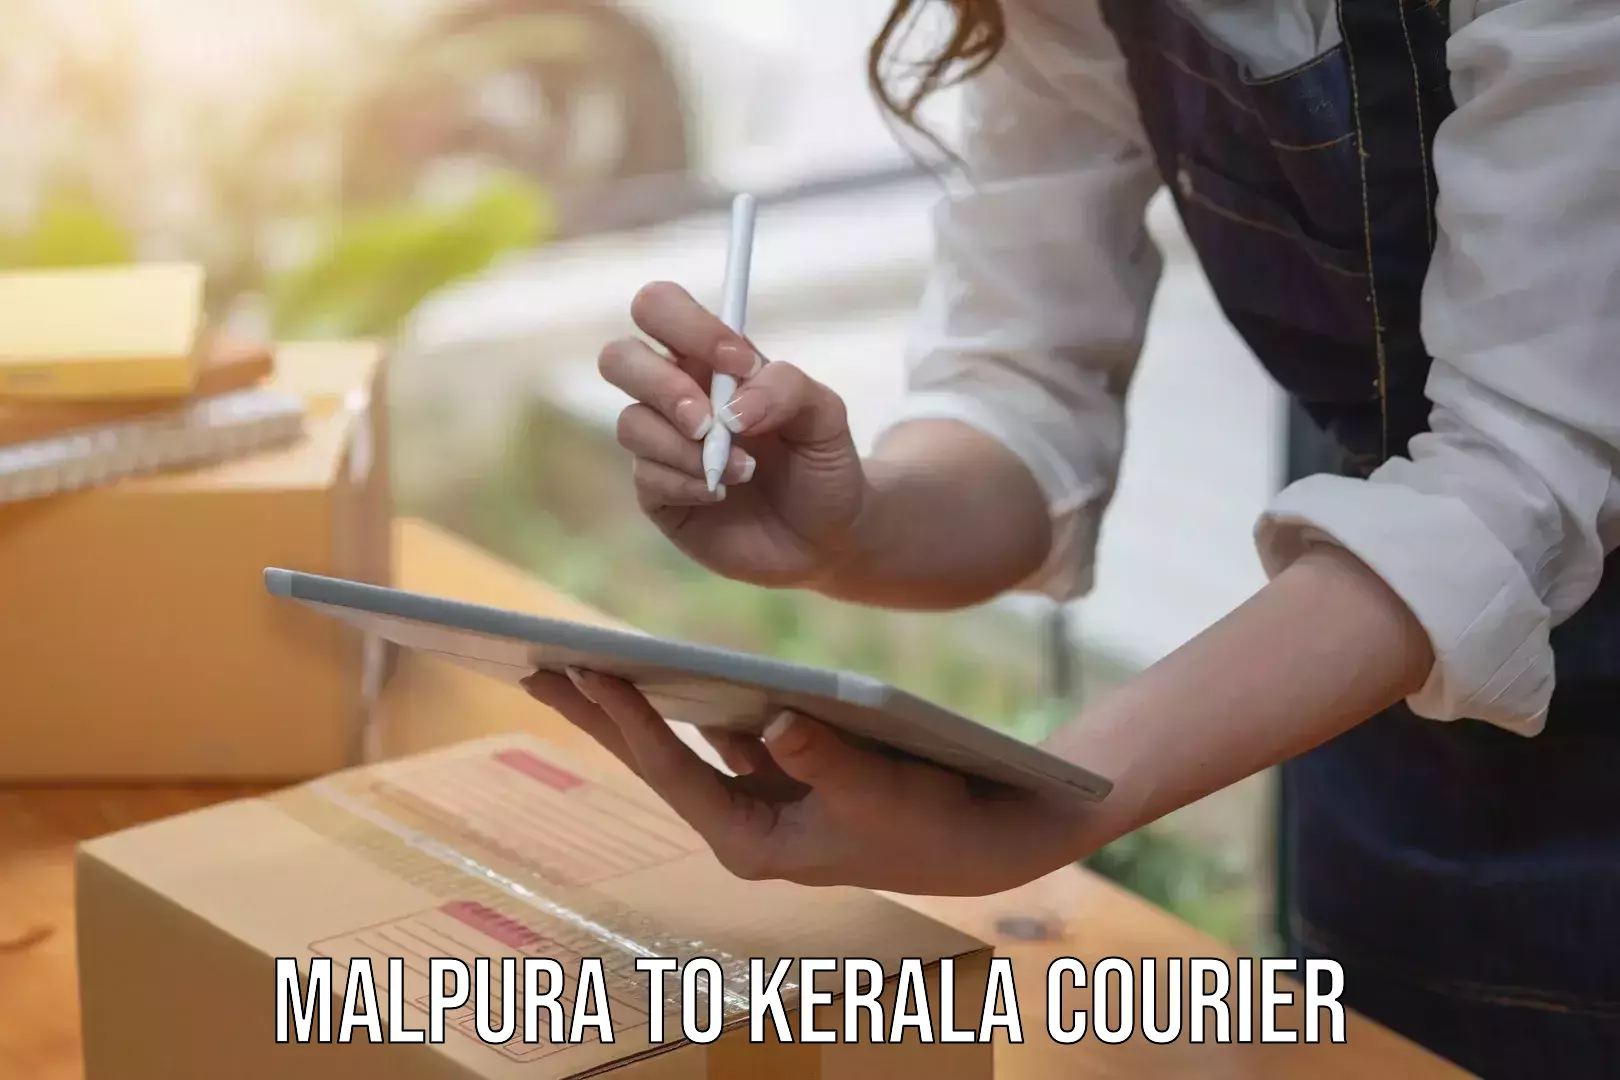 Nationwide delivery network Malpura to Kerala